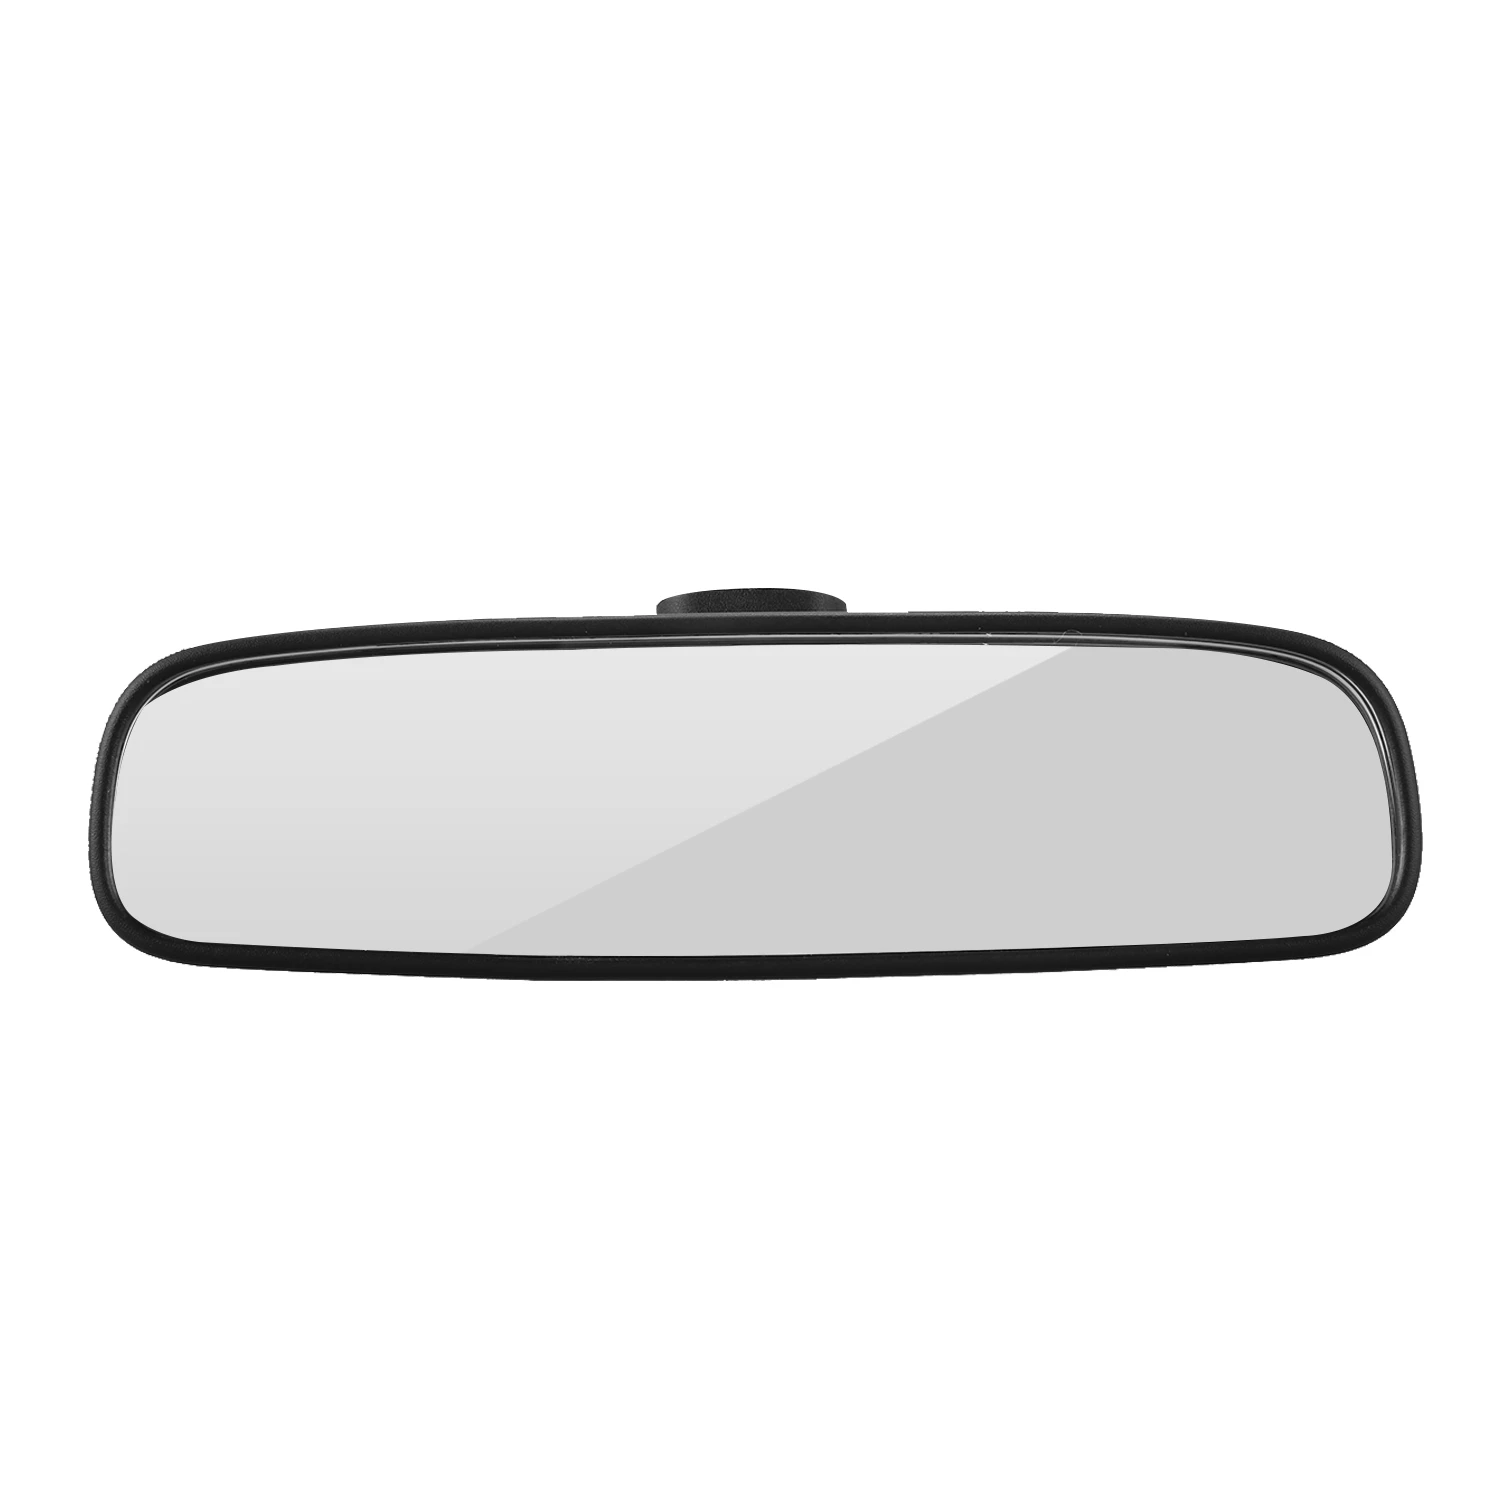 Замена зеркала заднего вида в салоне автомобиля 76400-SEA-024 для Honda Accord Civic CR-V Odyssey 2